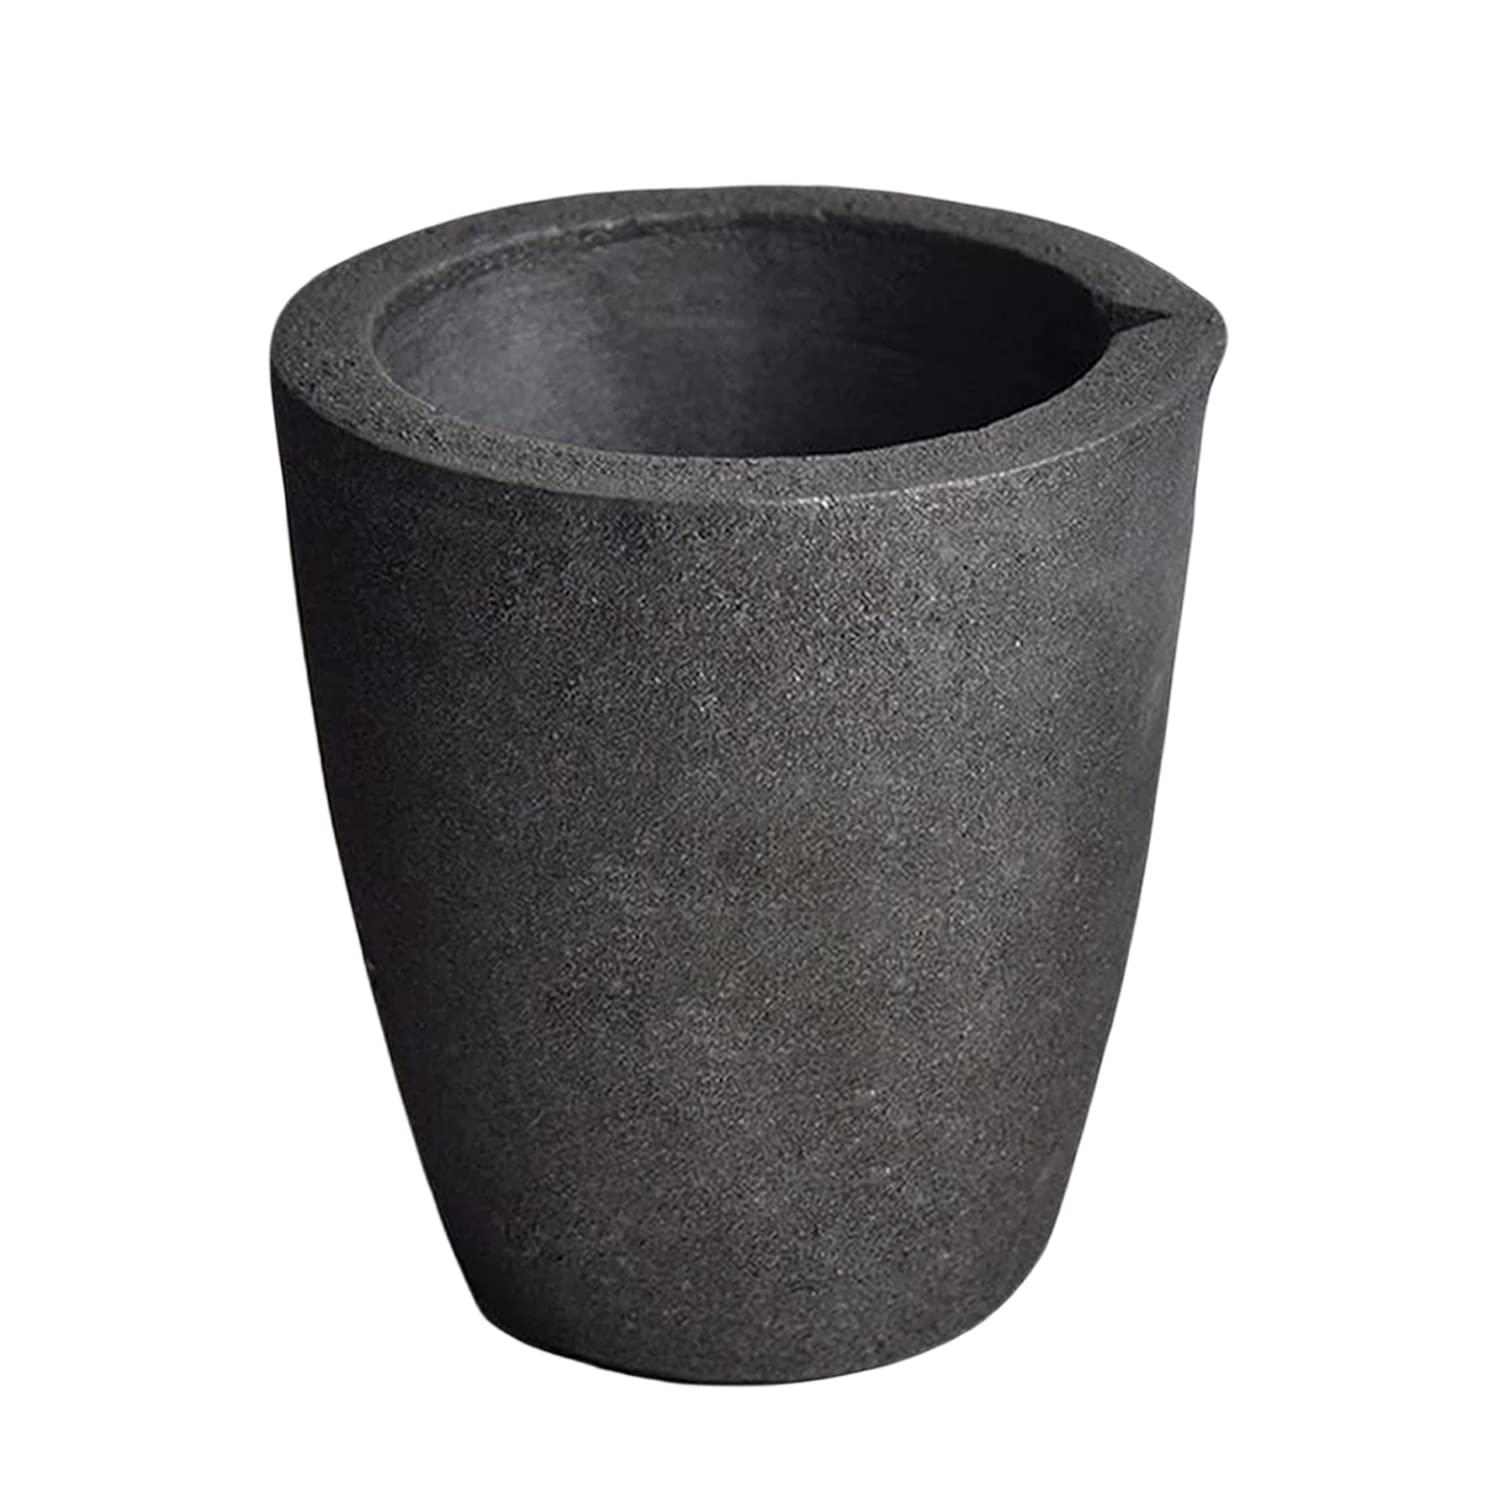  SEWACC 2 Pcs Melting Pot Crucibles for Melting Metal Refractory  Cement Metal Clay Claeys Green Sand Furnace Crucible Furnace Pot Ingot  Plaster of Paris Melting Crucible Jewelry Quartz